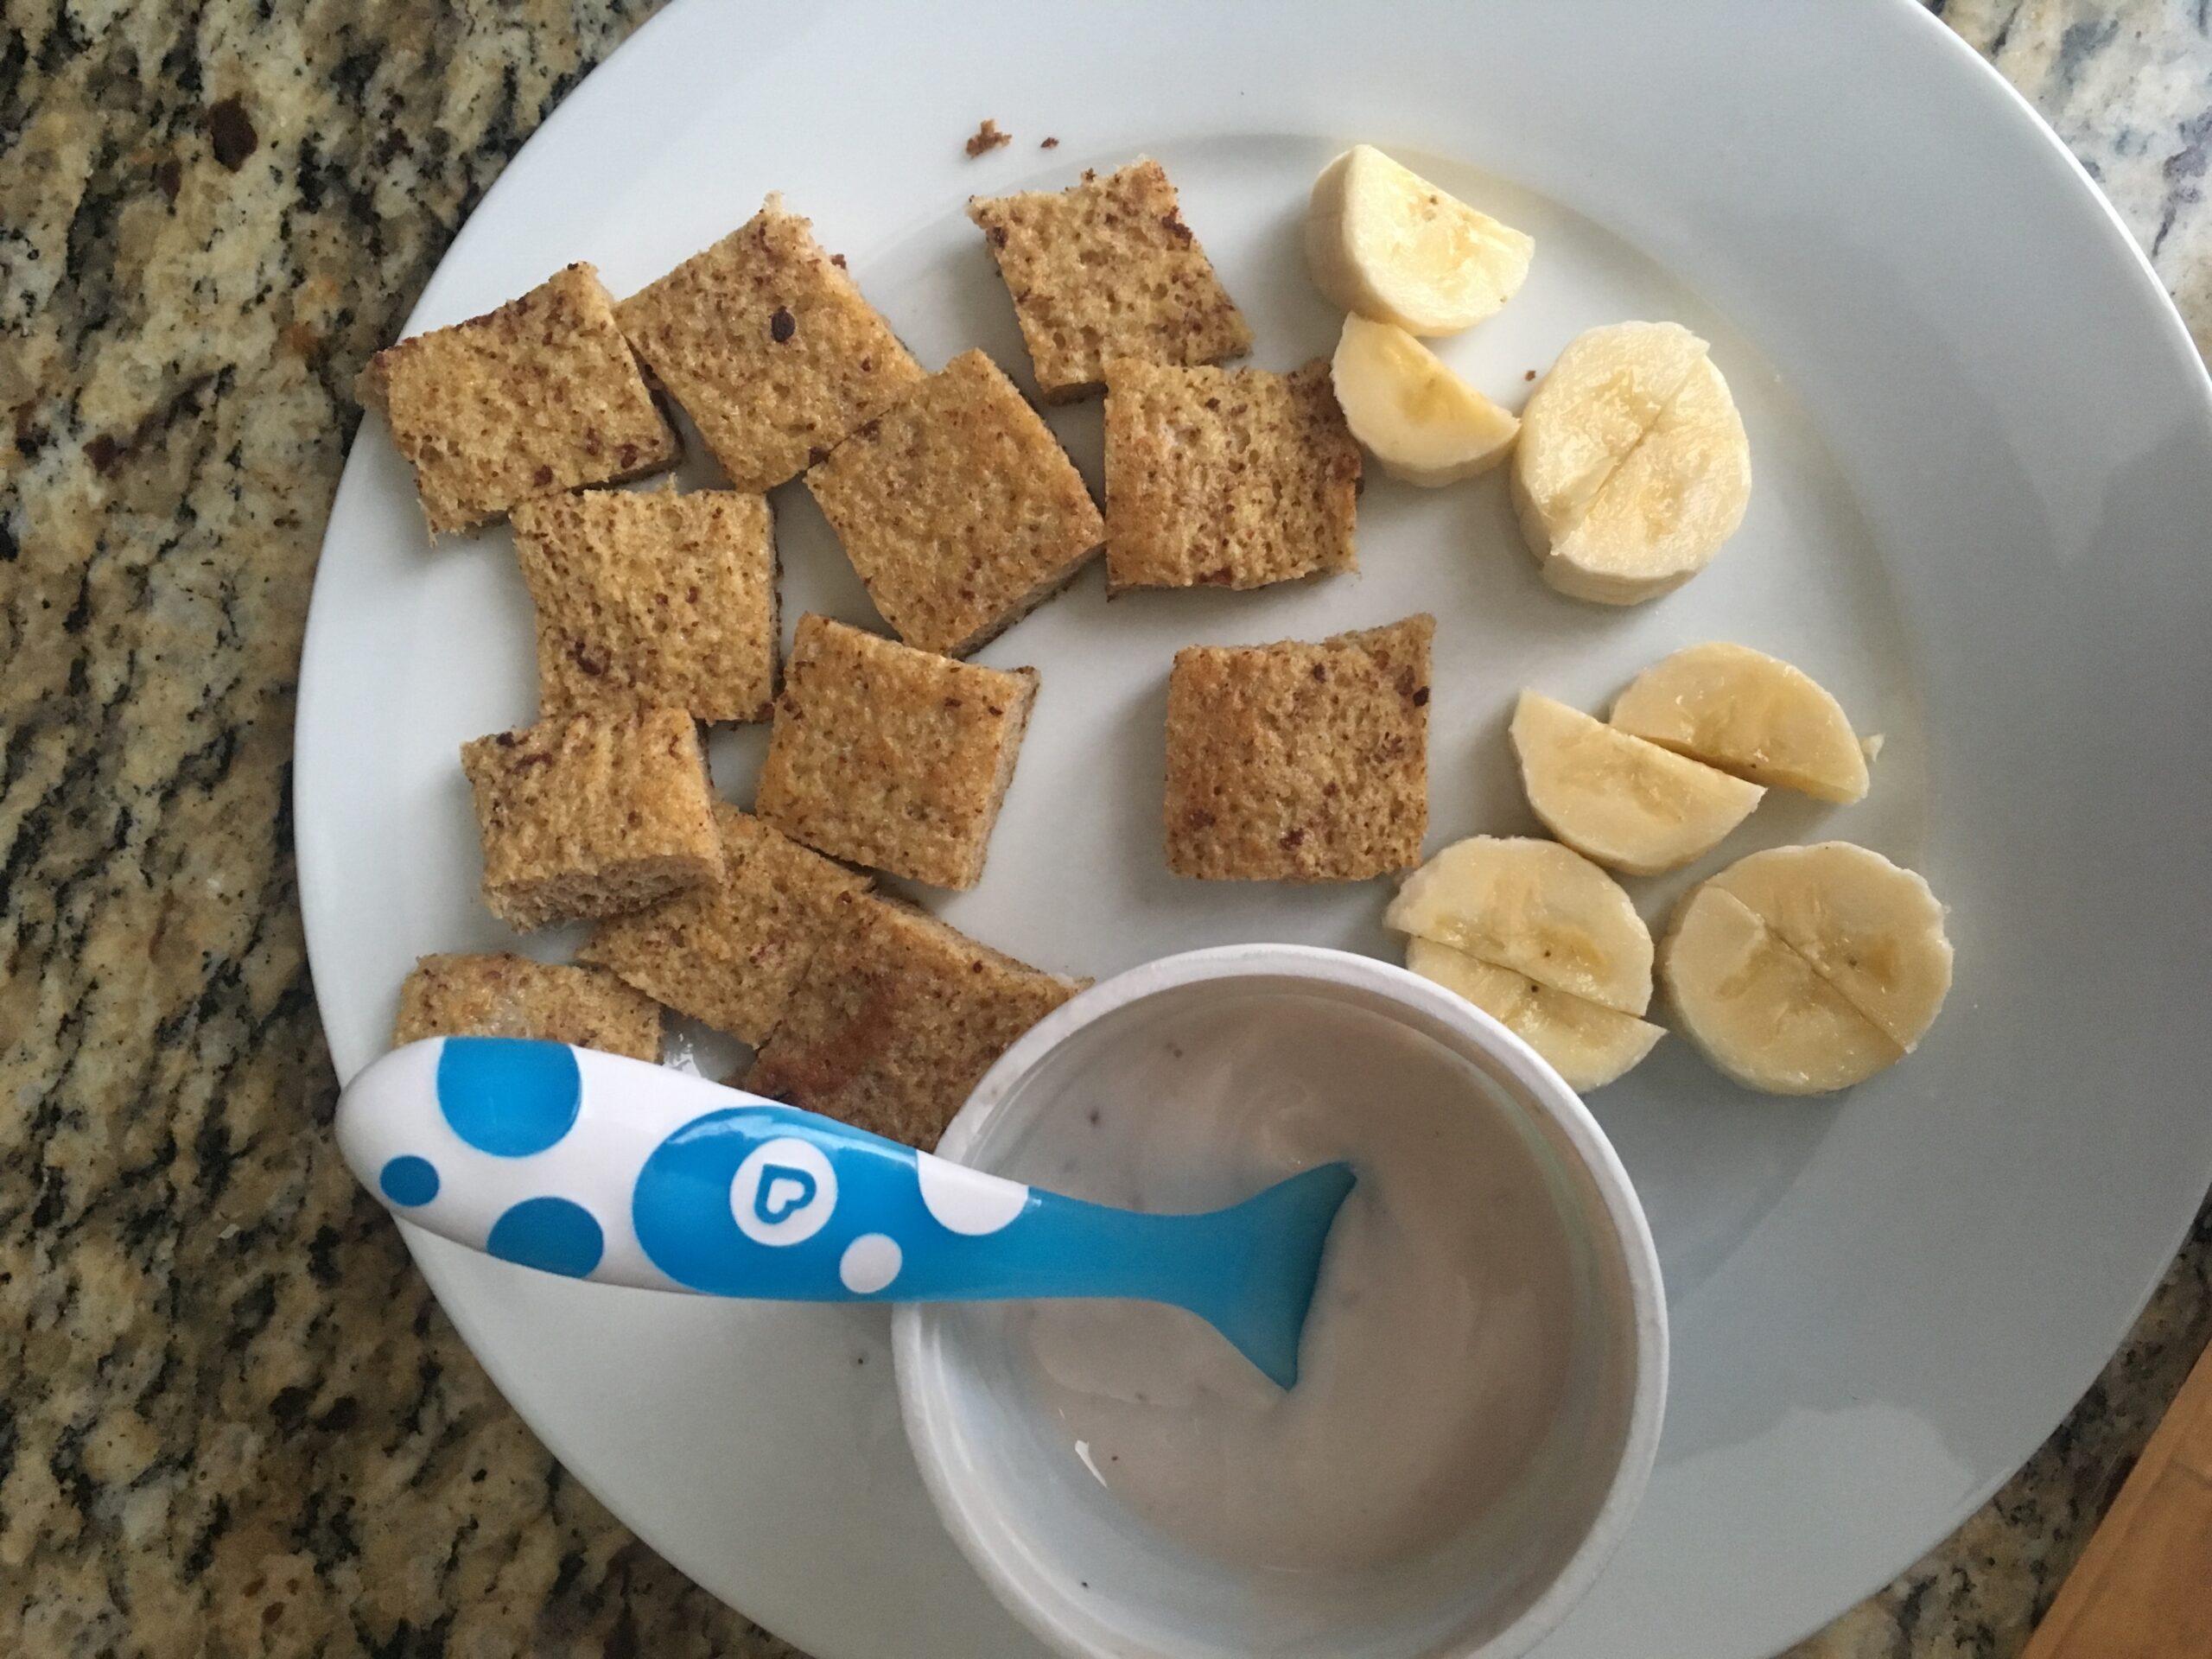 Easy Toddler Breakfast Ideas